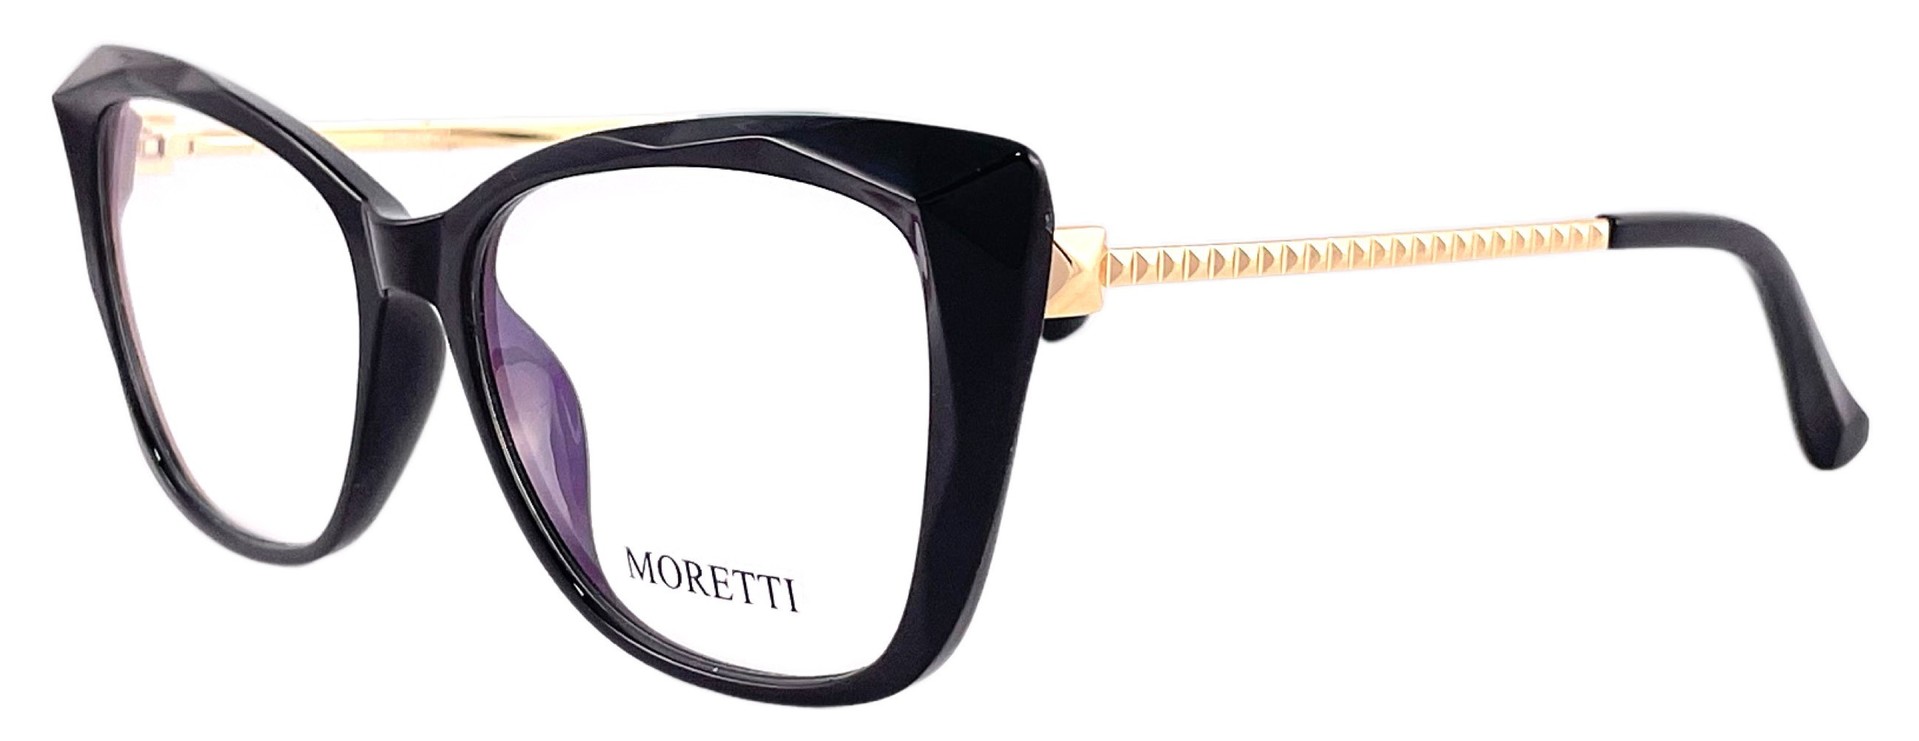 Moretti 2061 C1 2